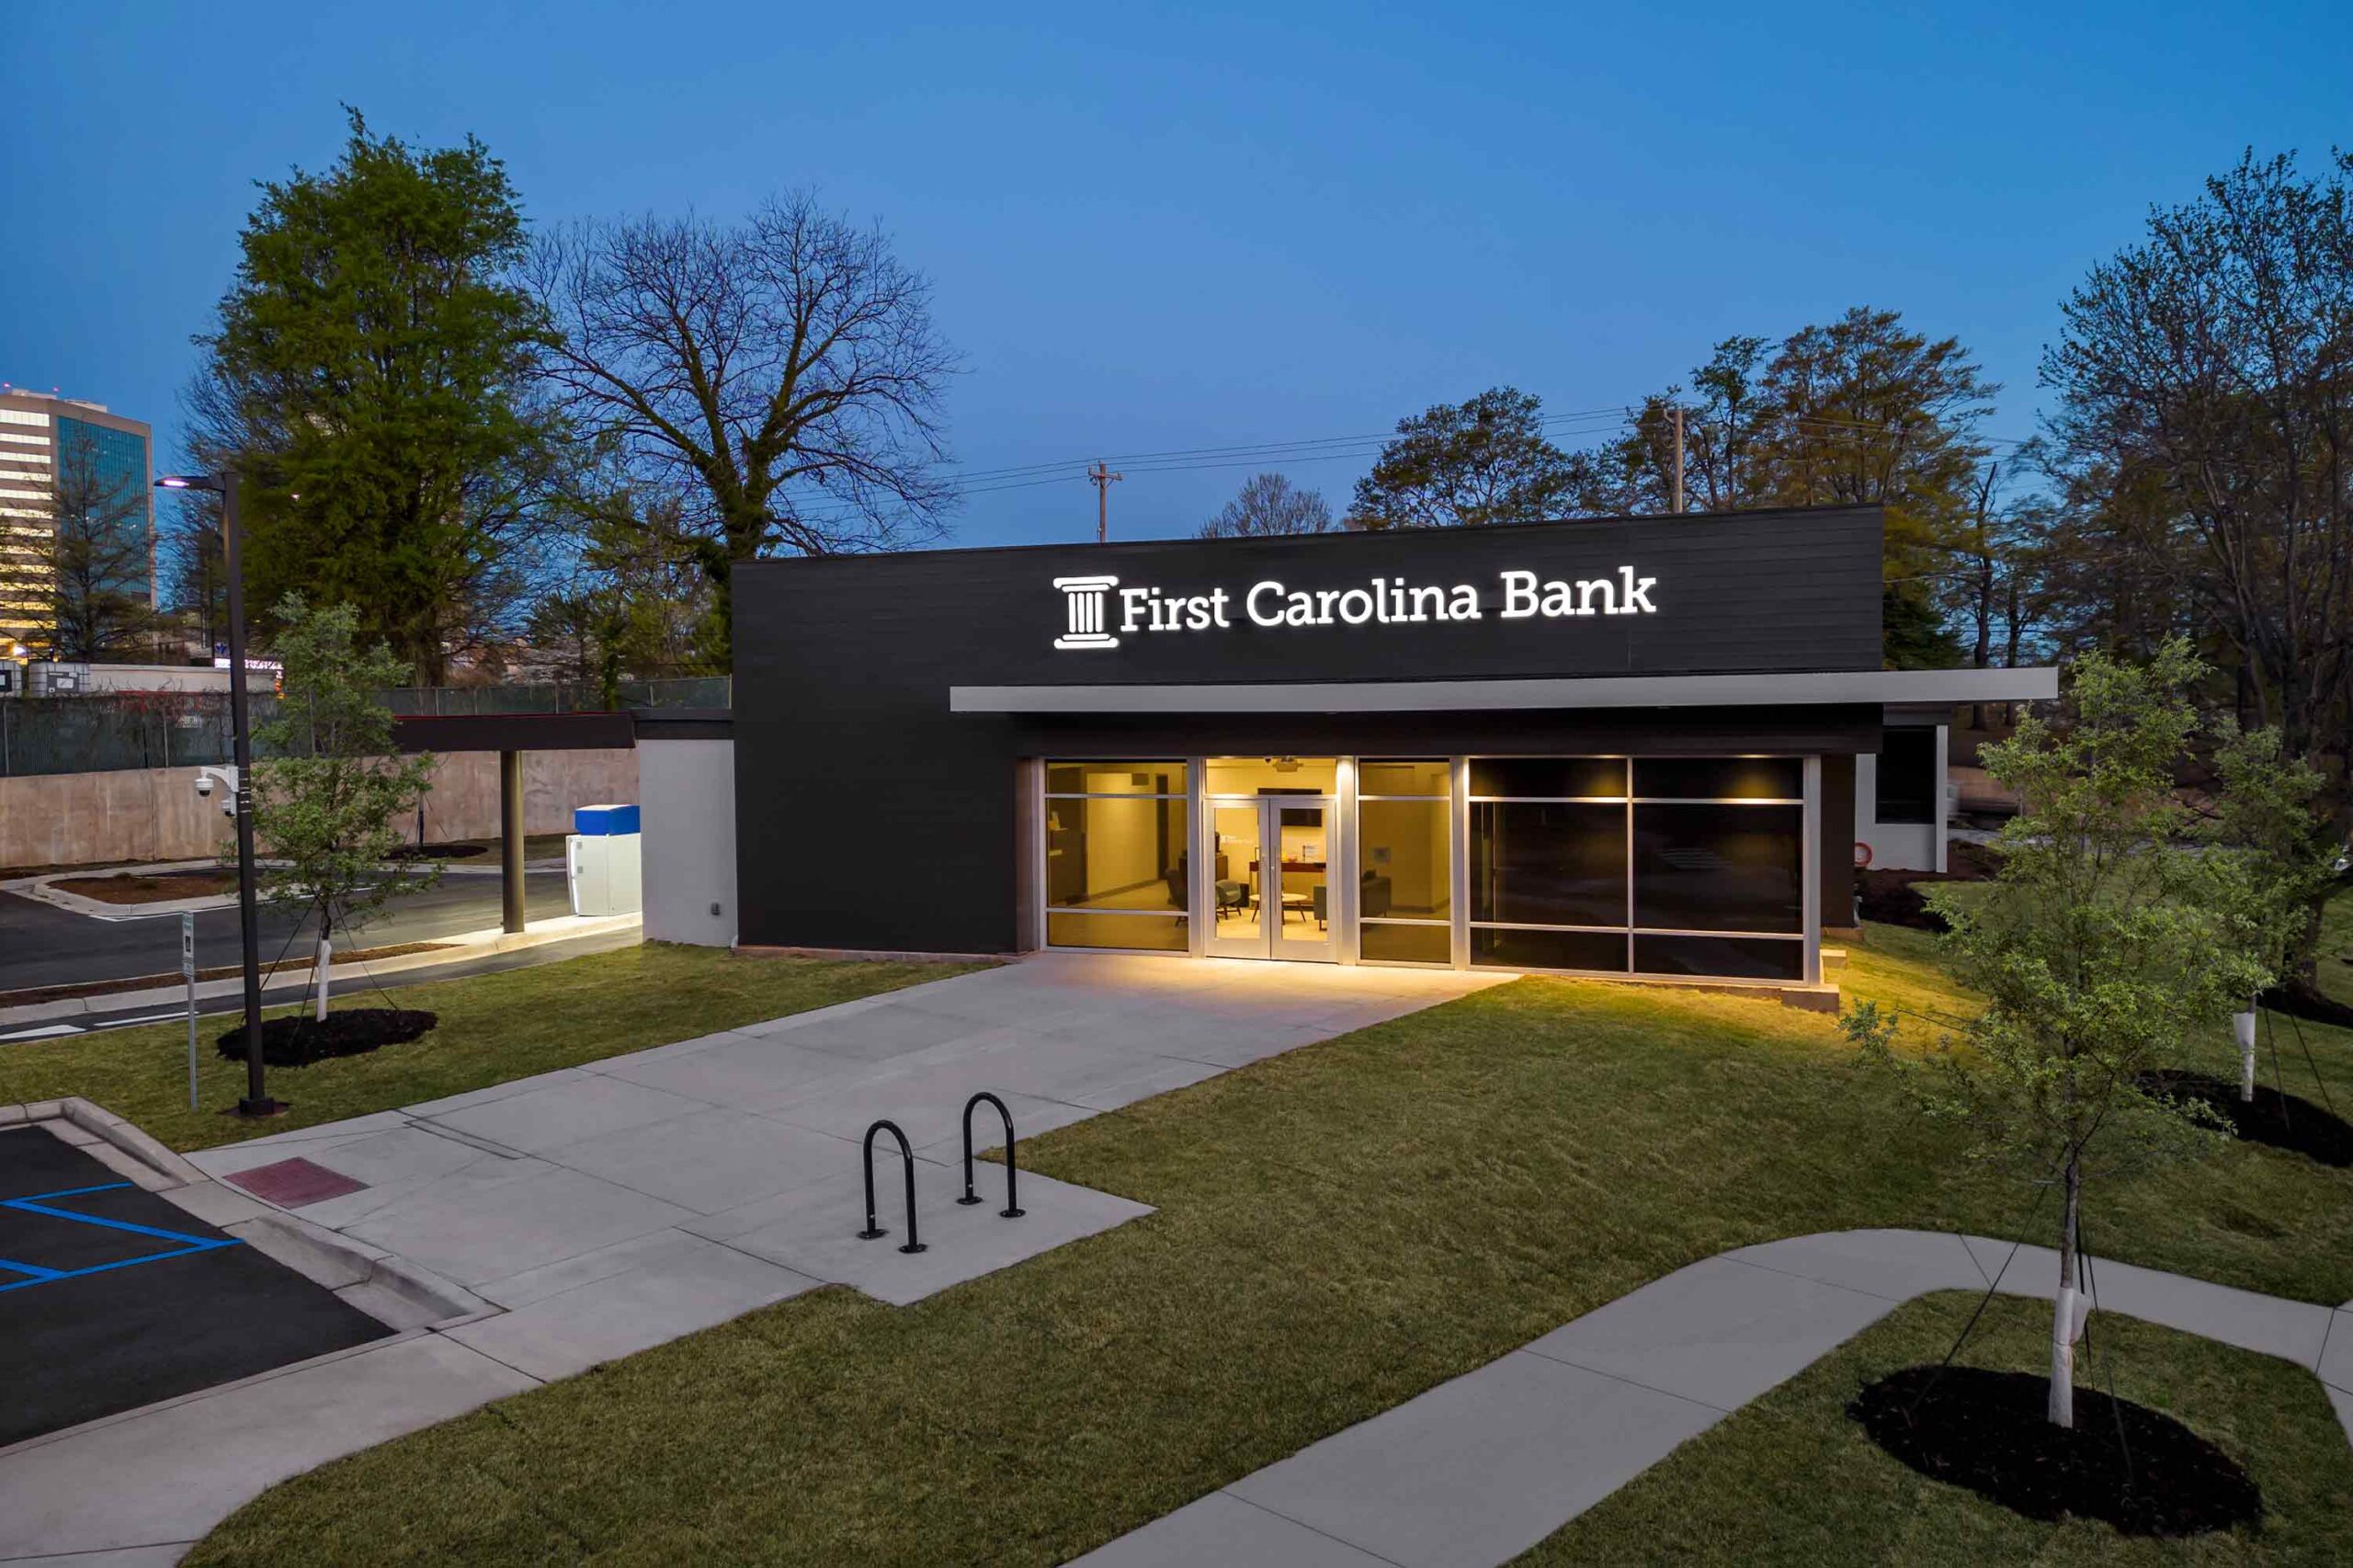 First Carolina Bank